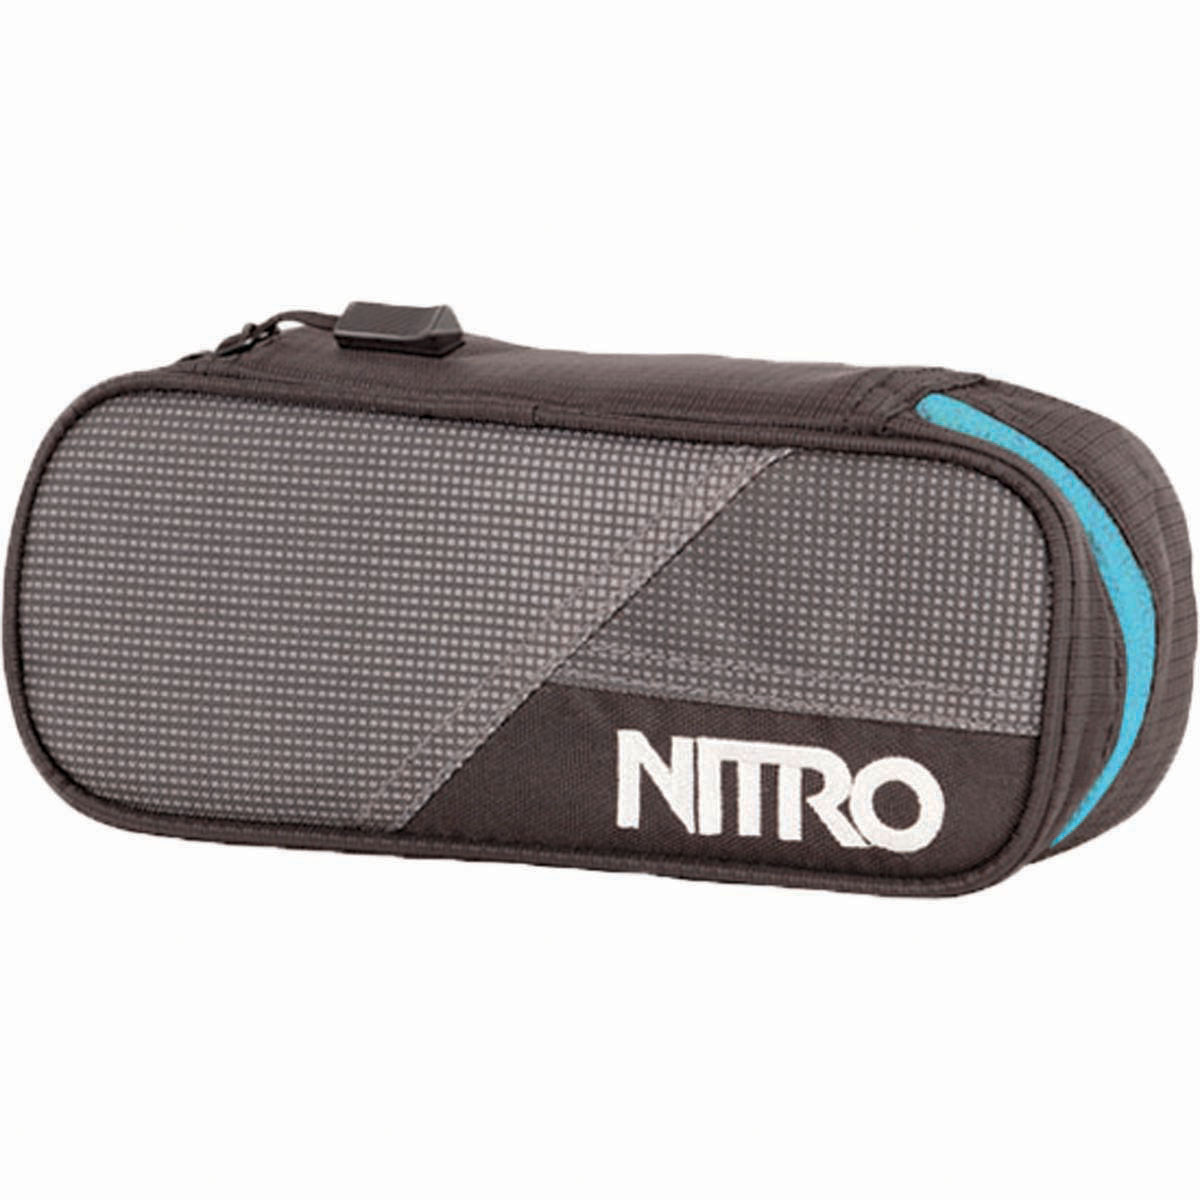 Nitro Federmäppchen Pencil Case-Im Nitrobags-Shop kaufen | Nitrobags Shop